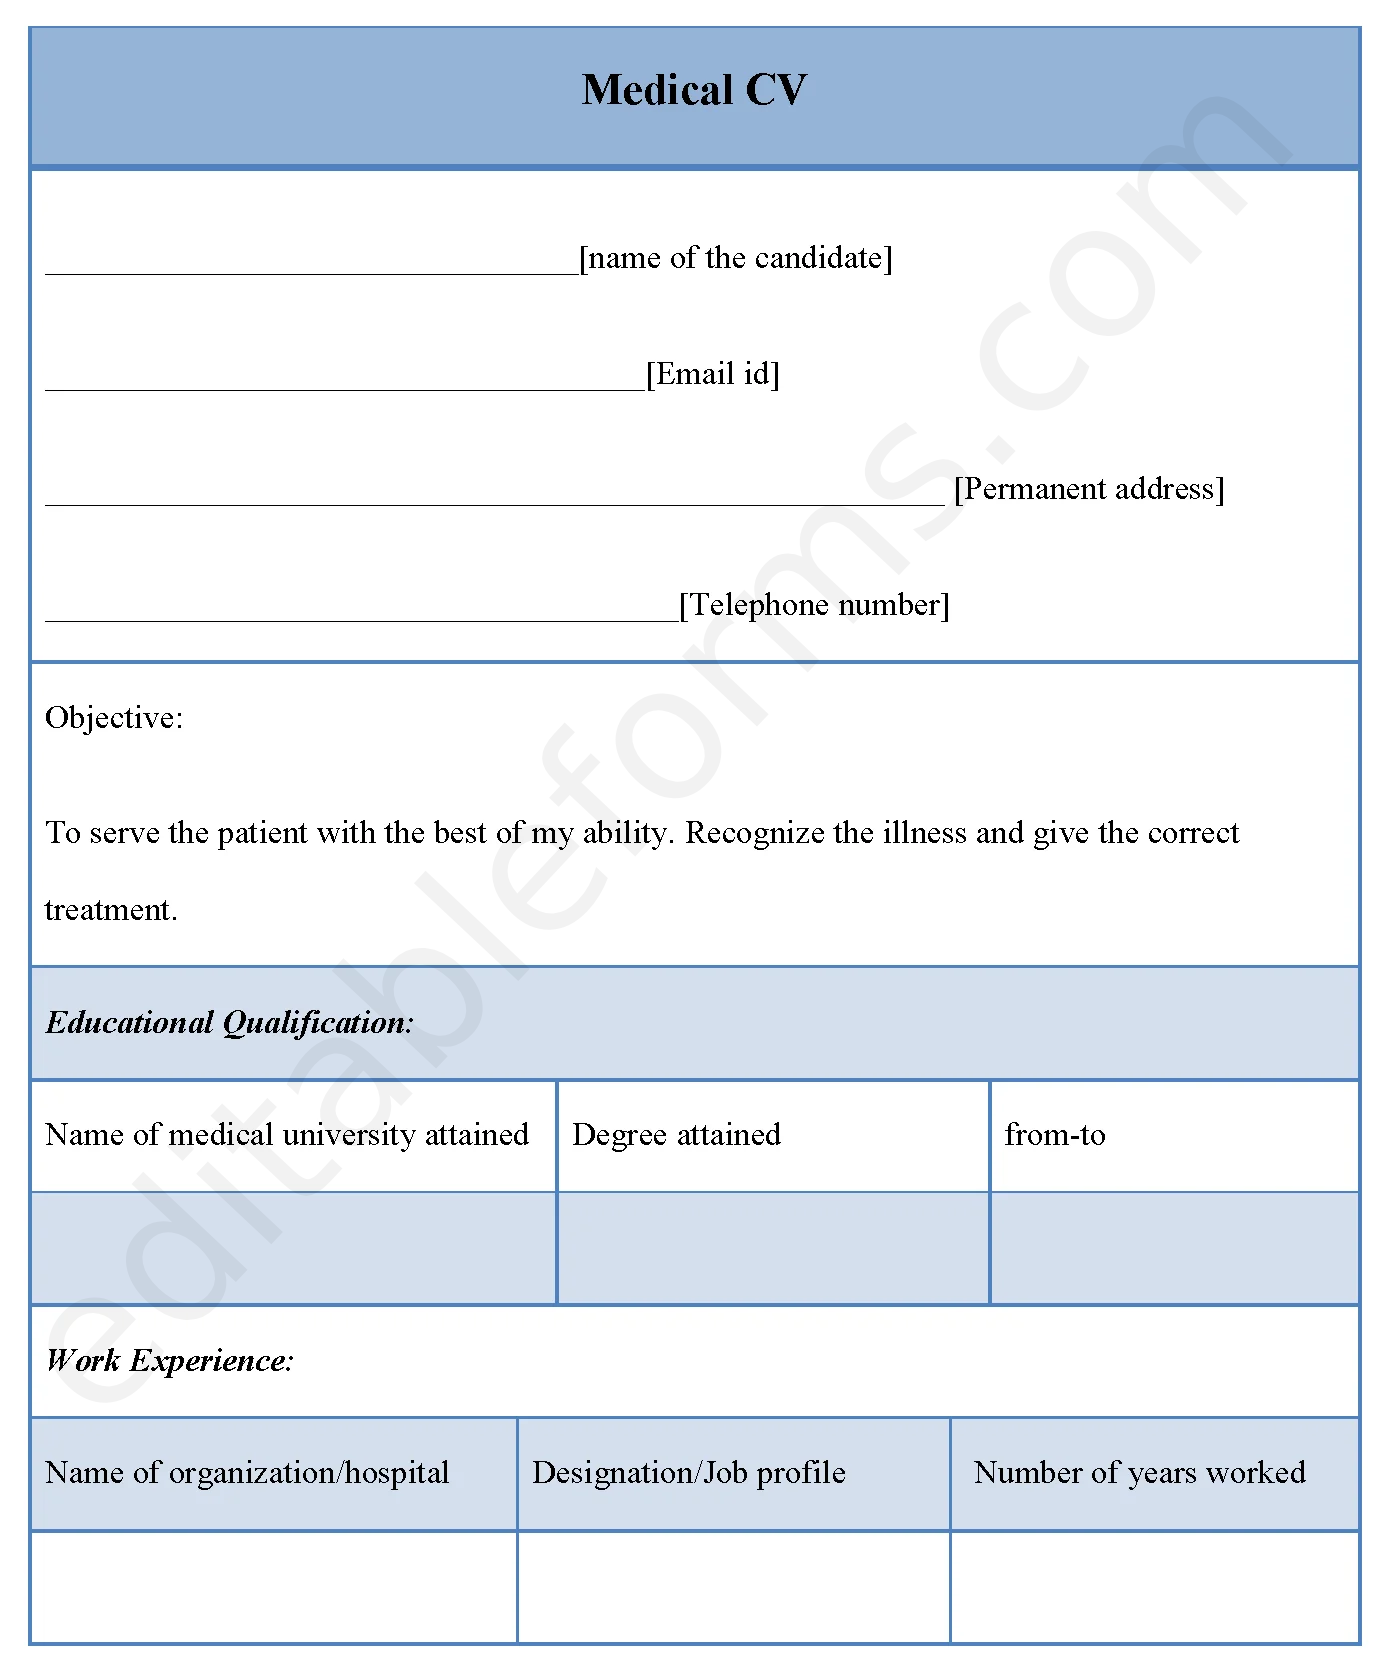 Medical CV Fillable PDF Template